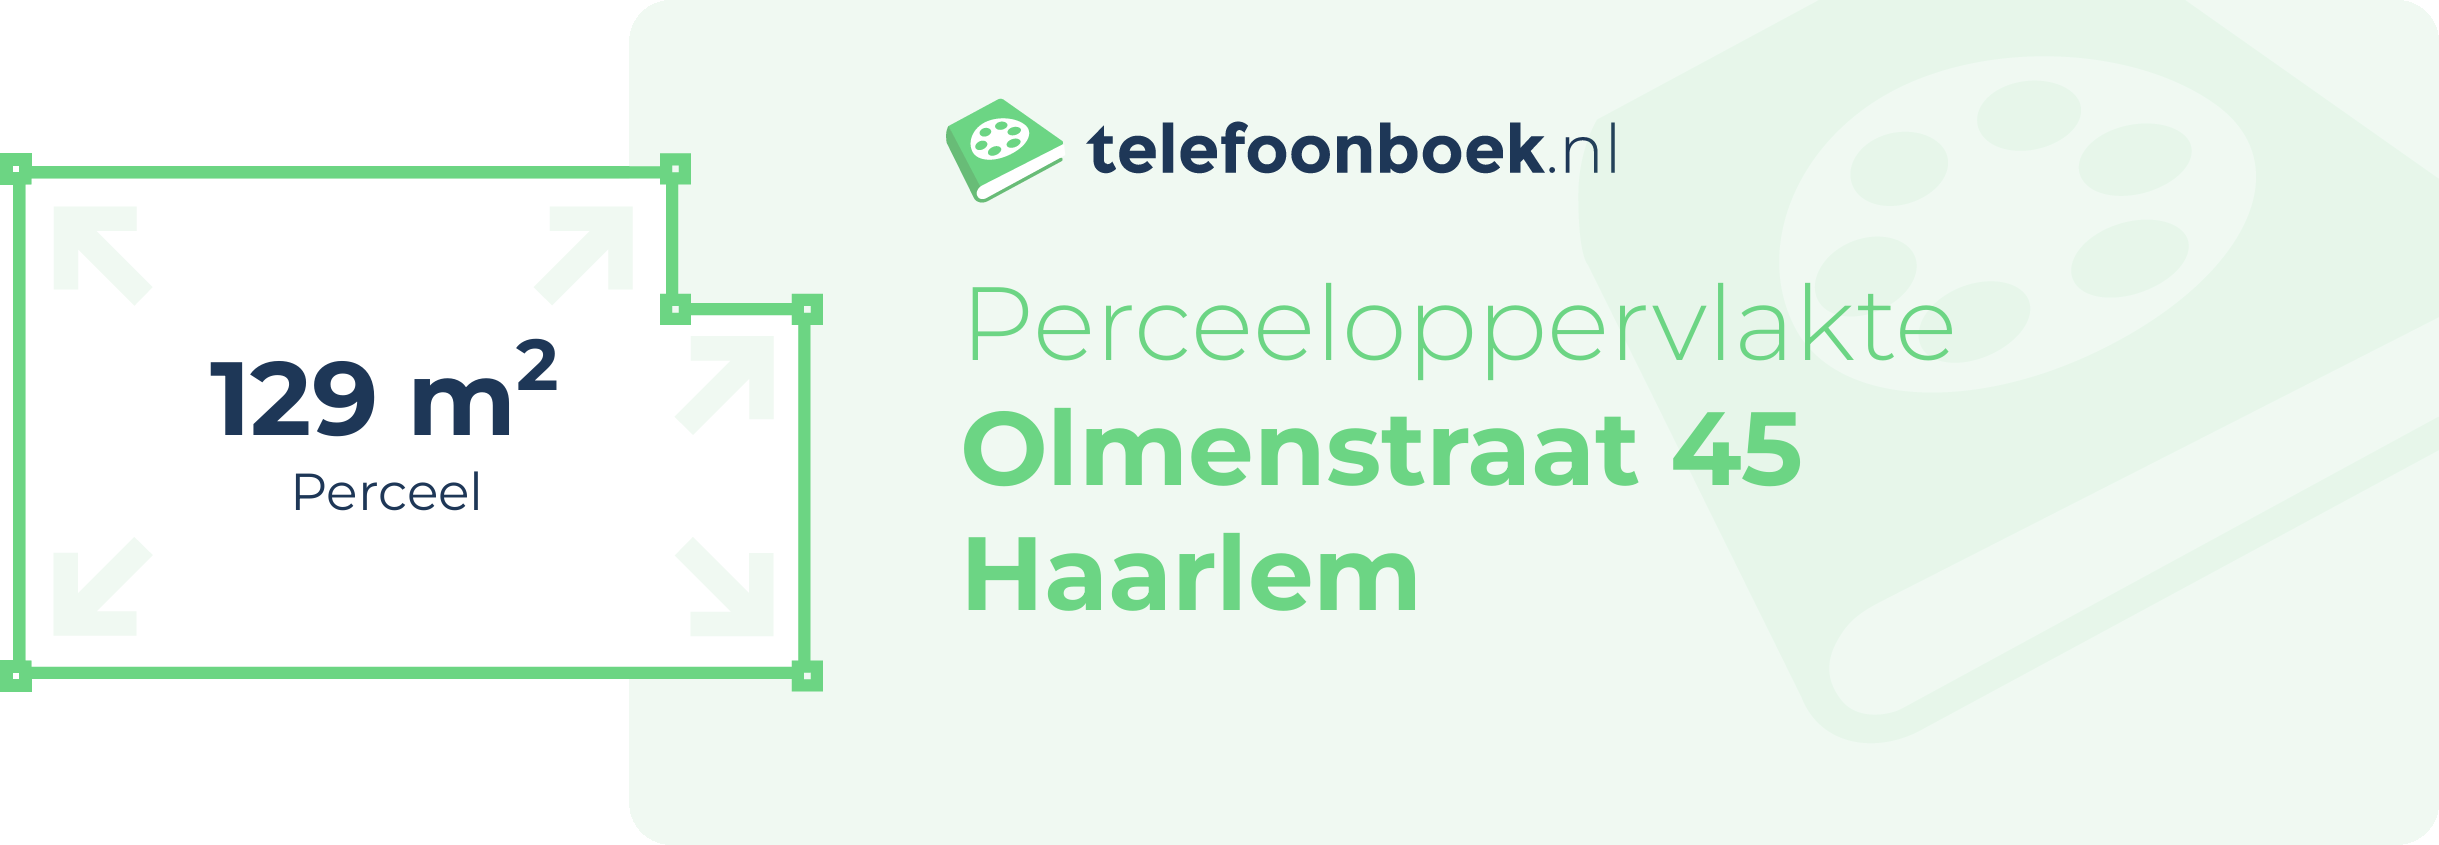 Perceeloppervlakte Olmenstraat 45 Haarlem